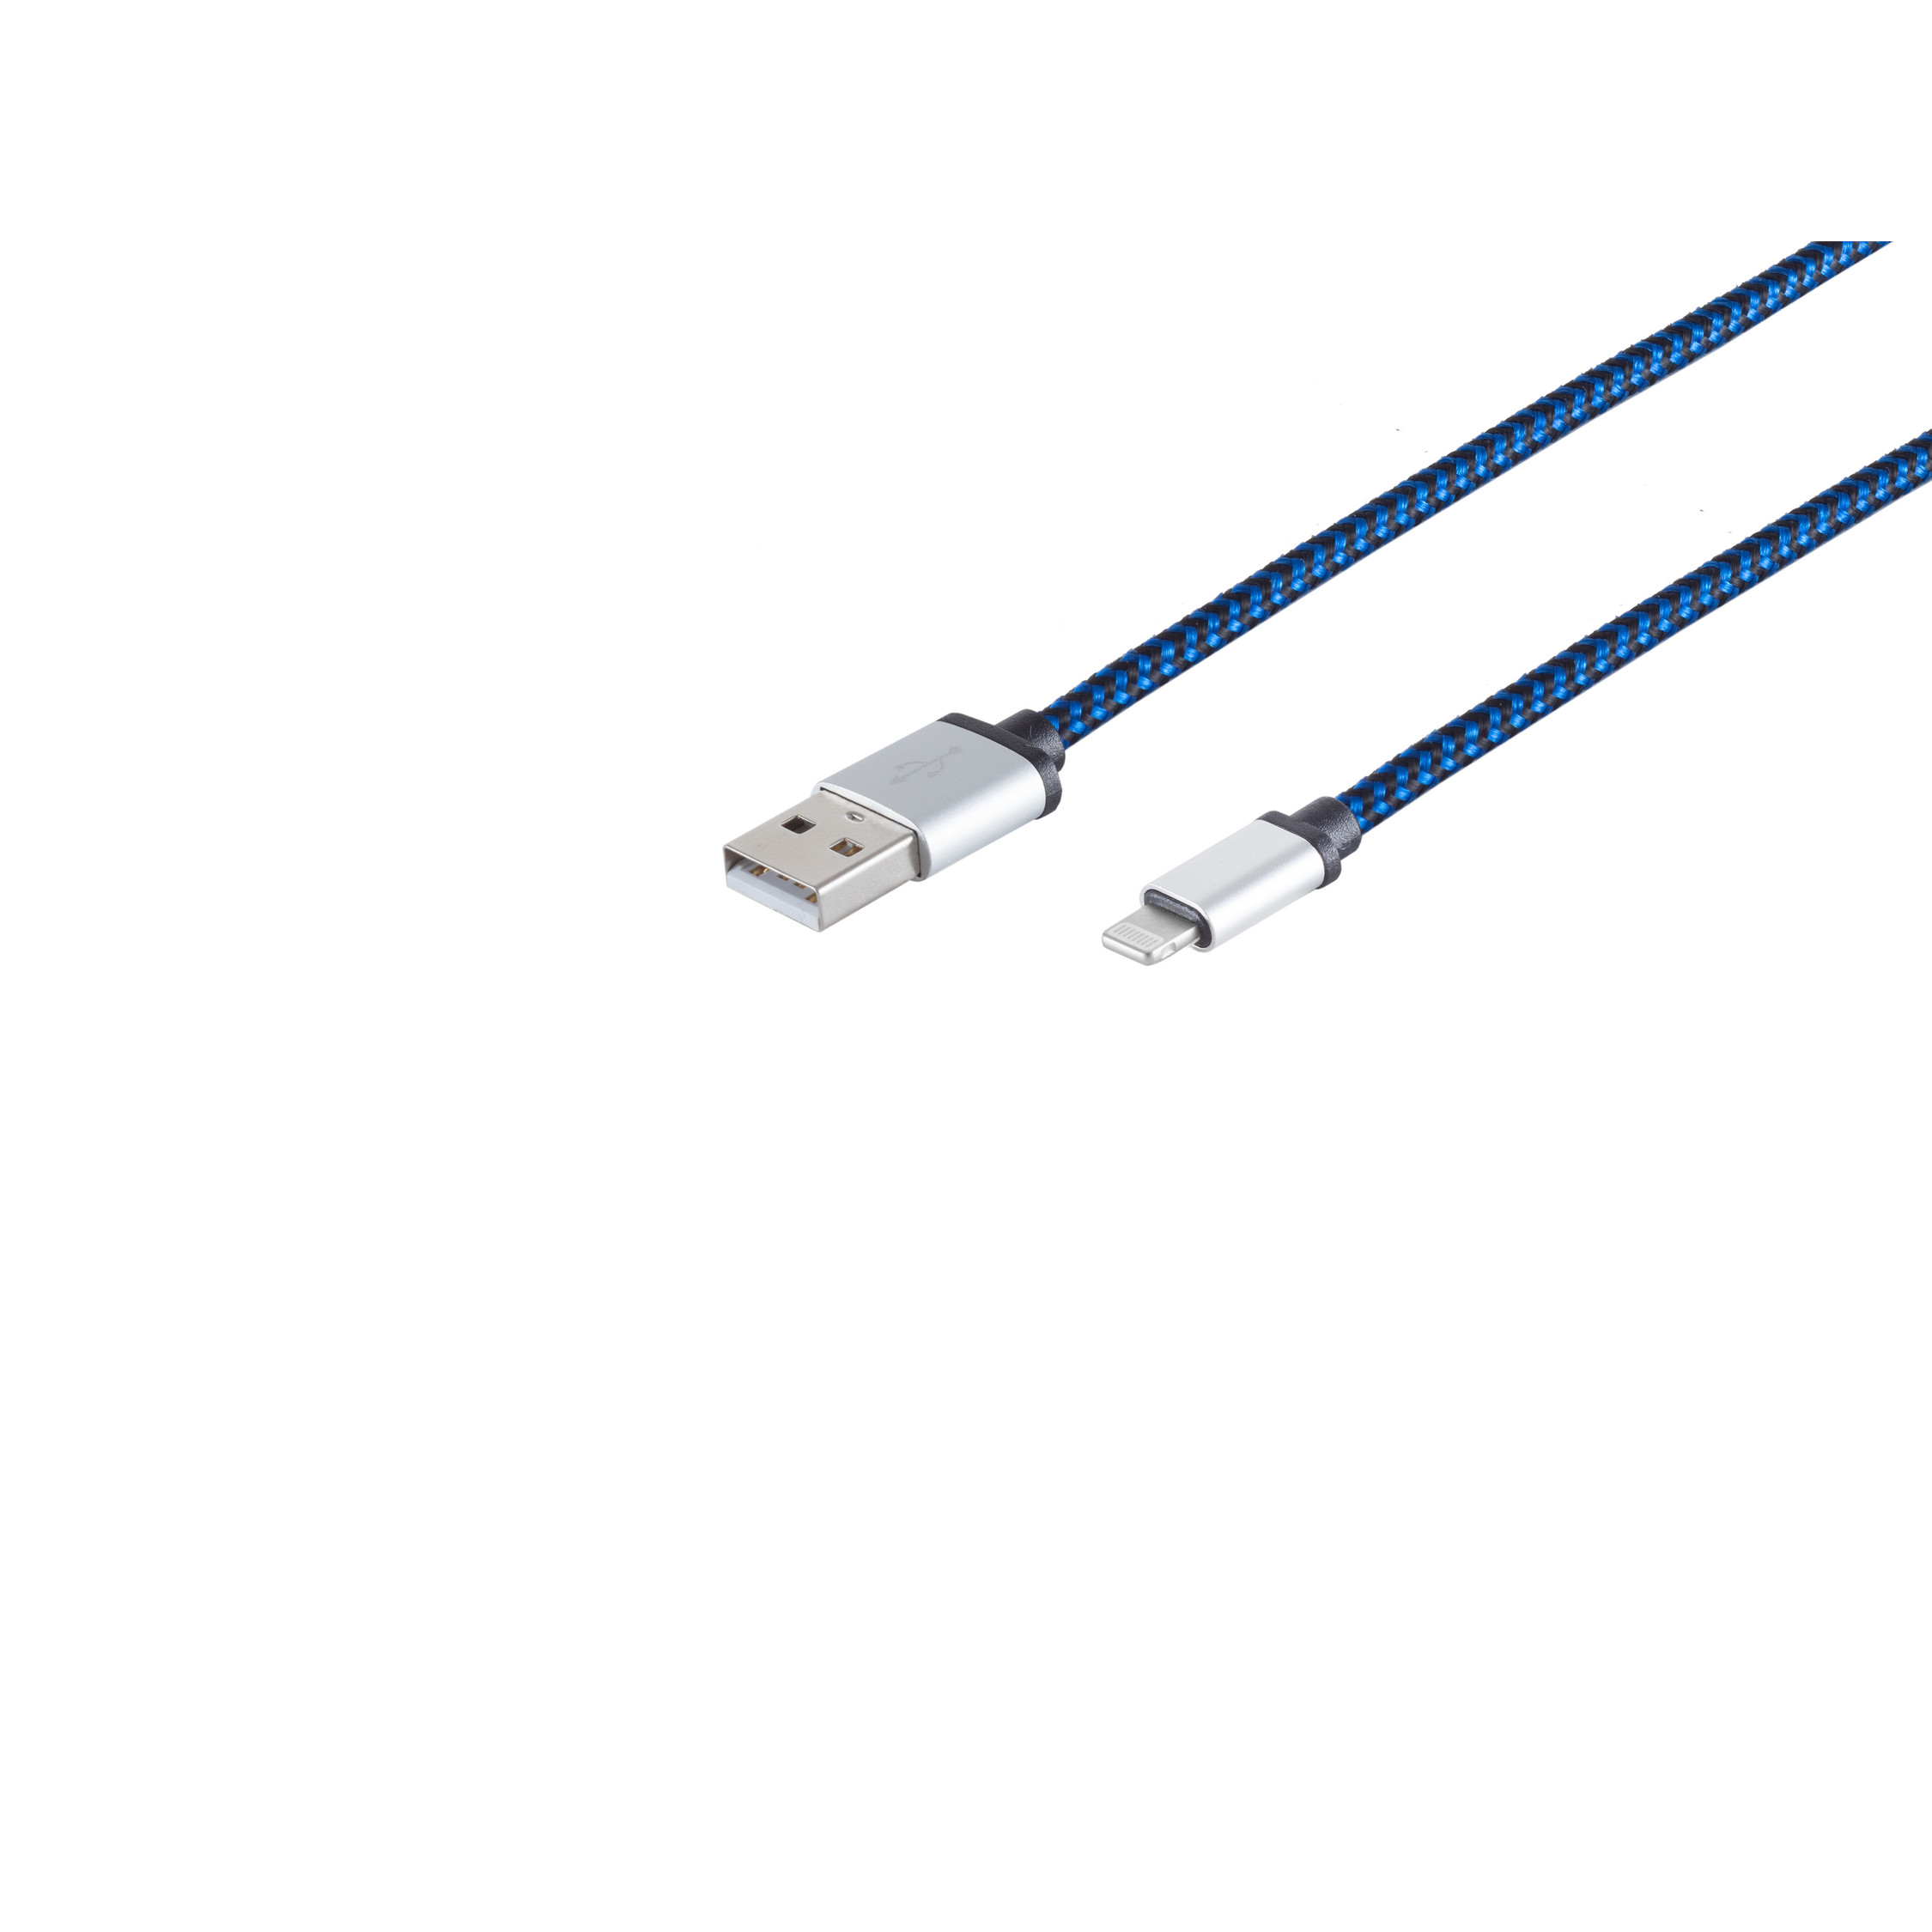 S/CONN MAXIMUM CONNECTIVITY USB-Ladekabel A 0,9m USB Stecker auf Stecker Kabel 8-pin